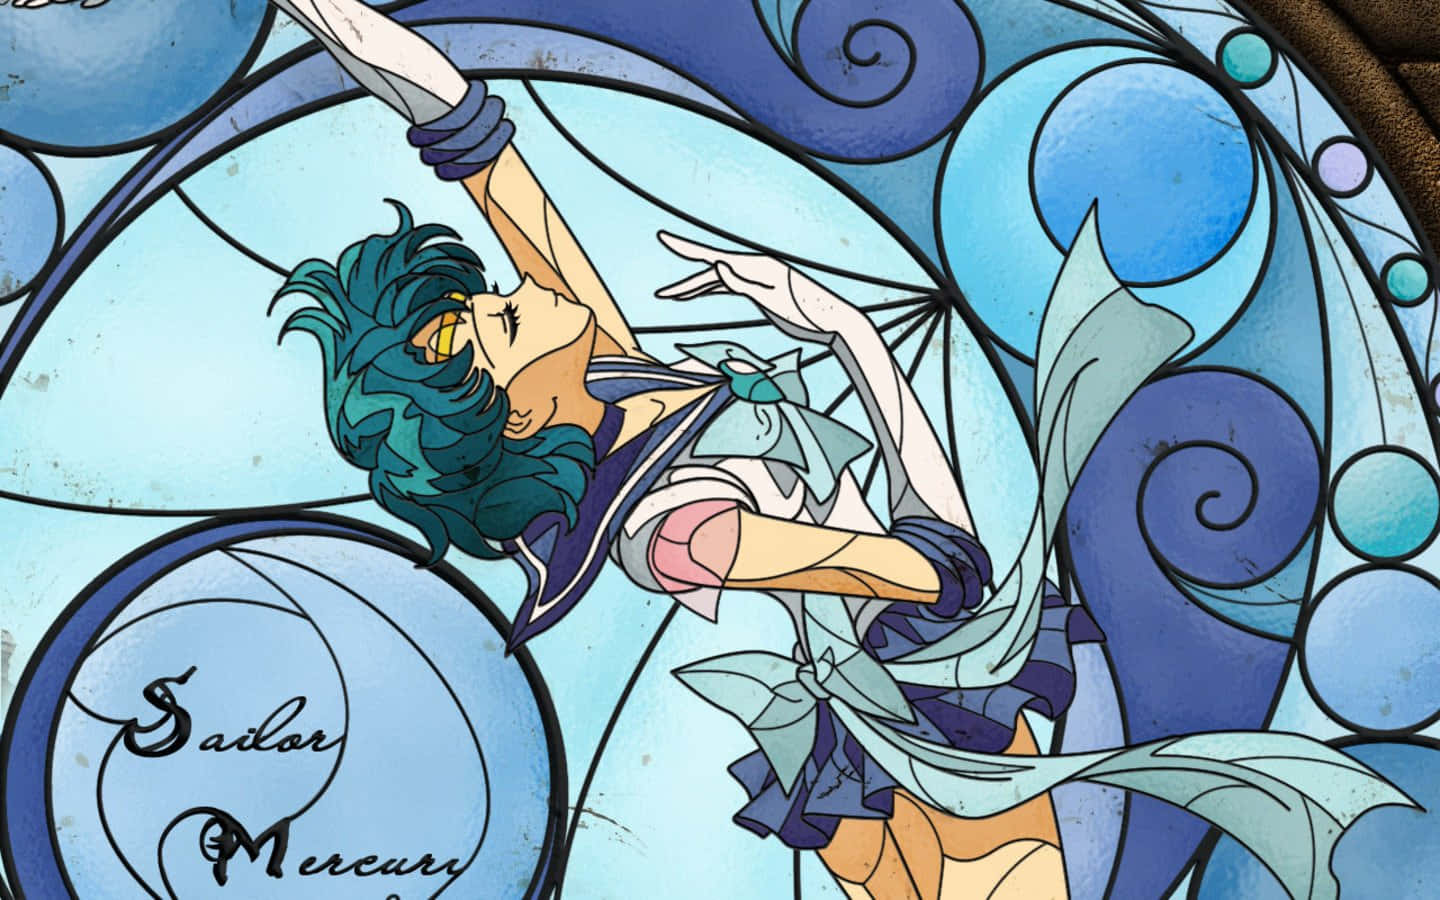 The Captivating Sailor Mercury